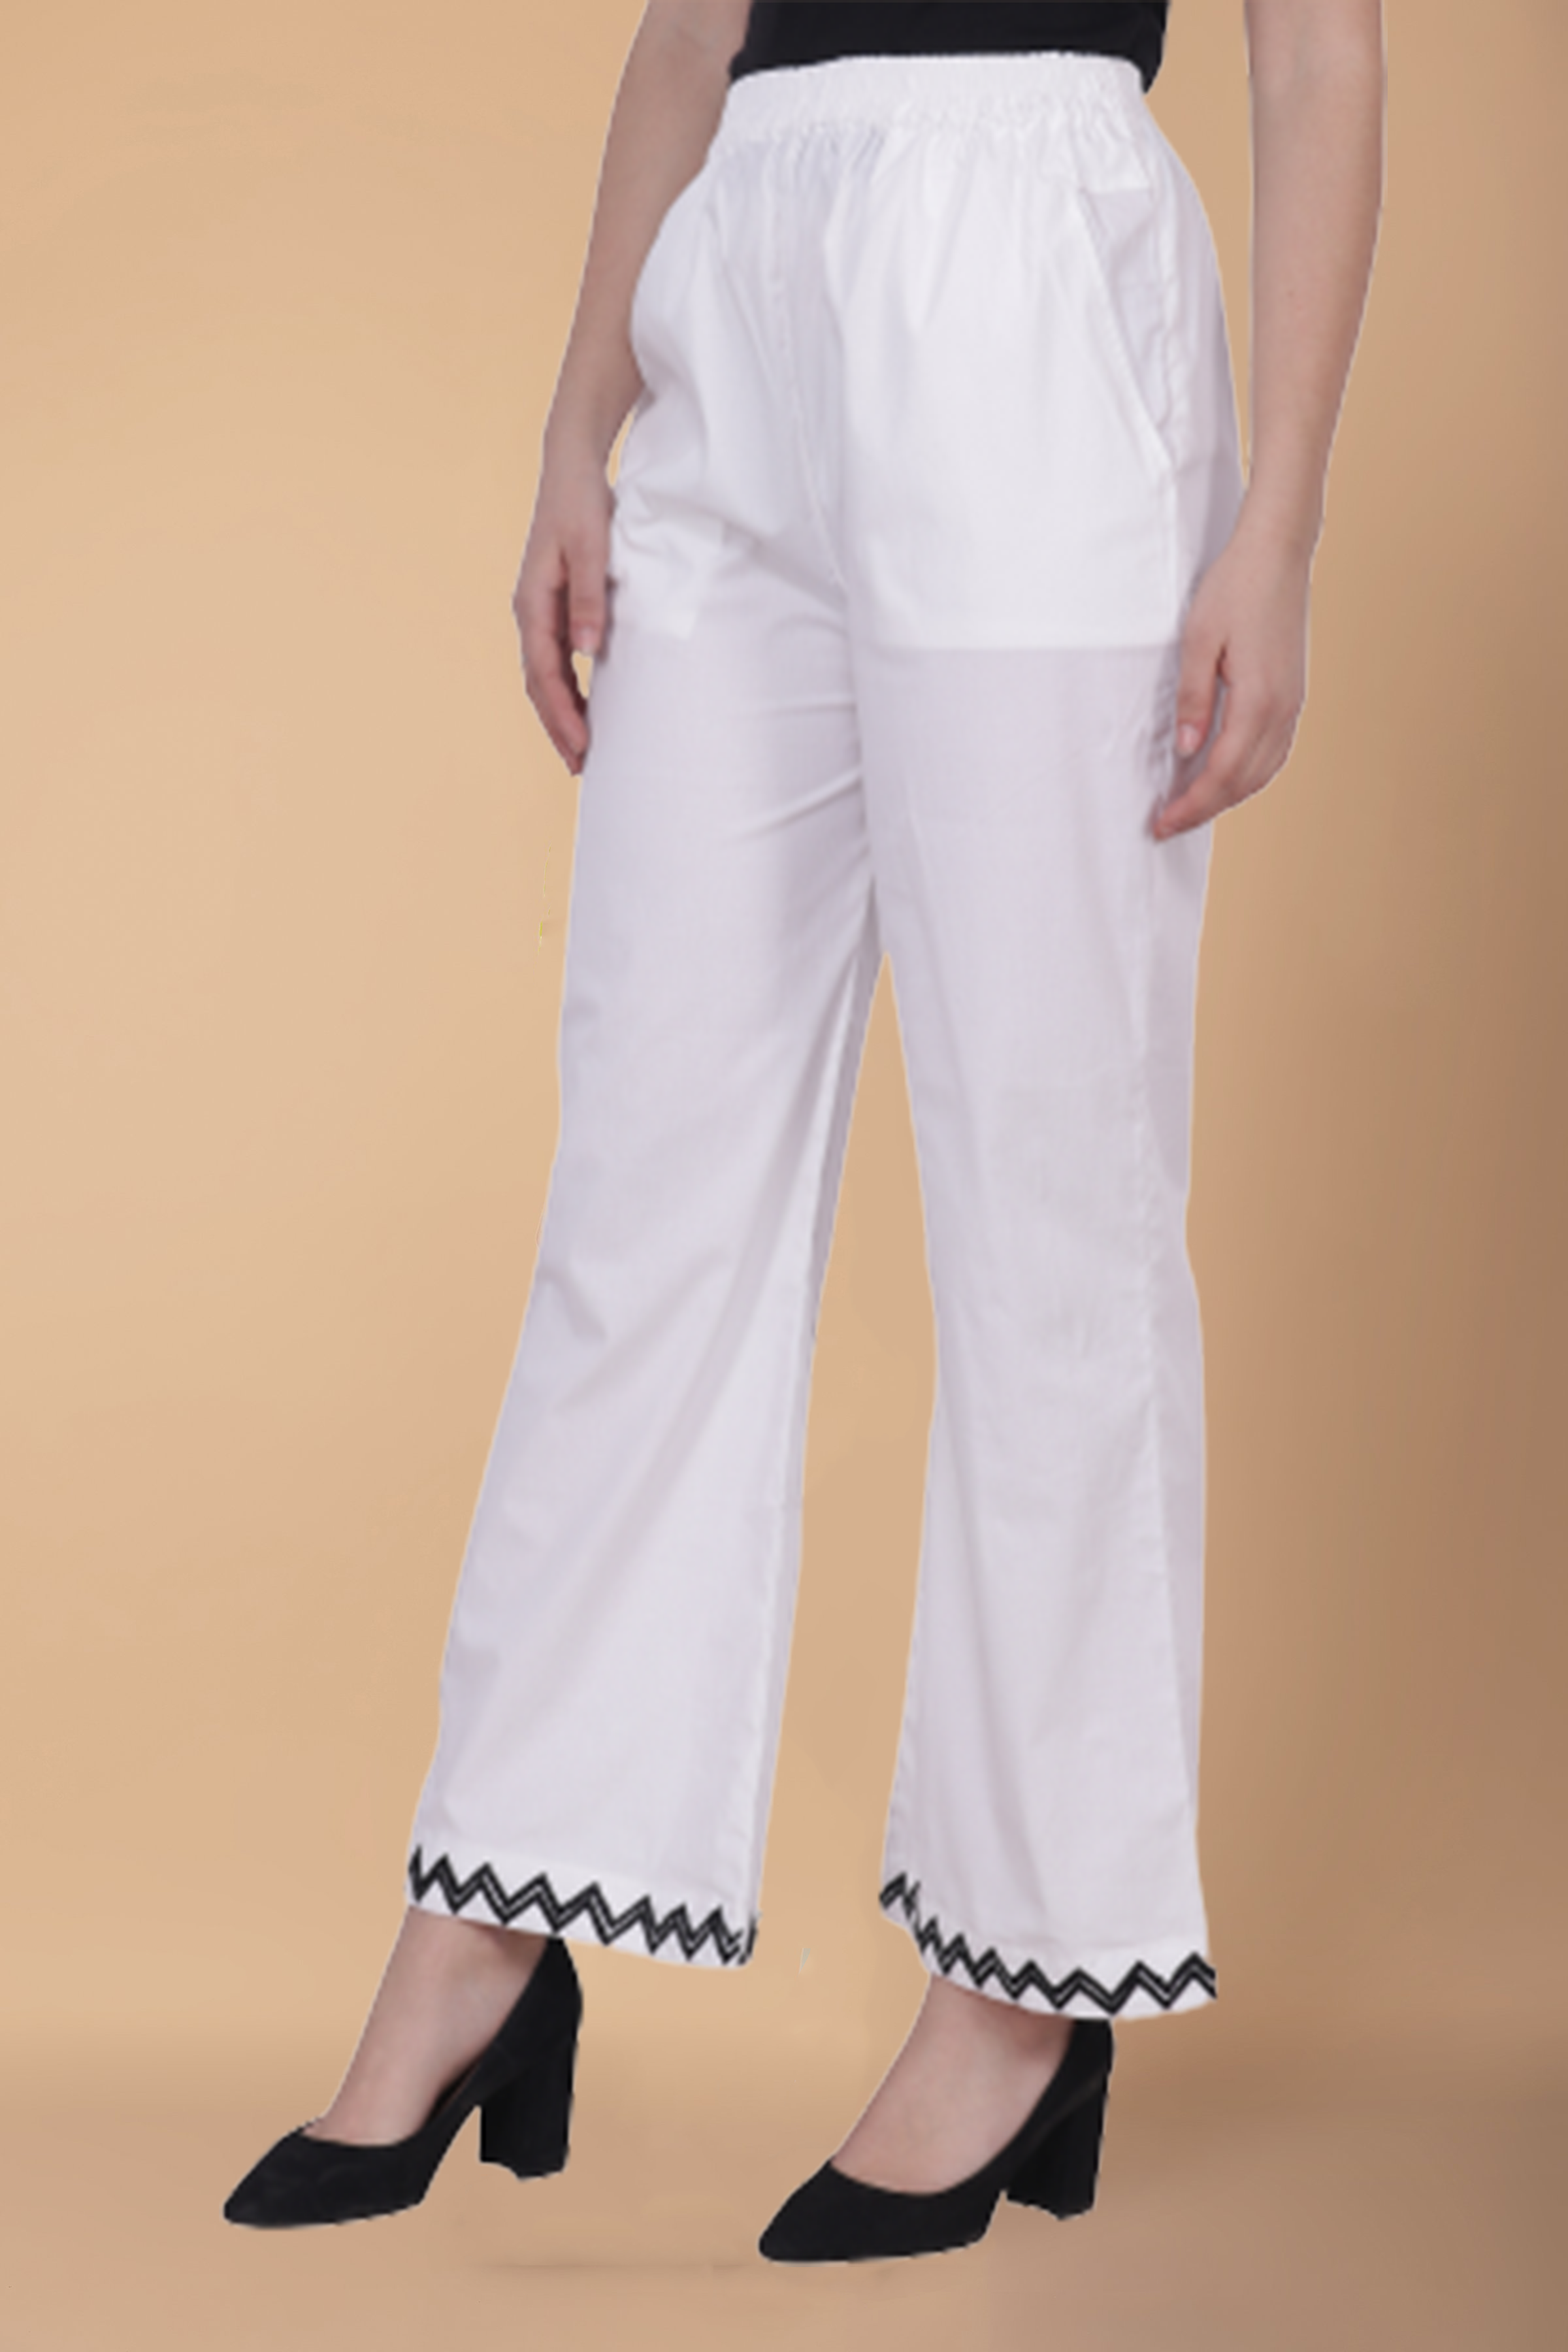 renvena Women Adult Renaissance Ruffle Hem Bloomers Fancy Dress Long Pants  Pantaloons Beige Medium - Walmart.com